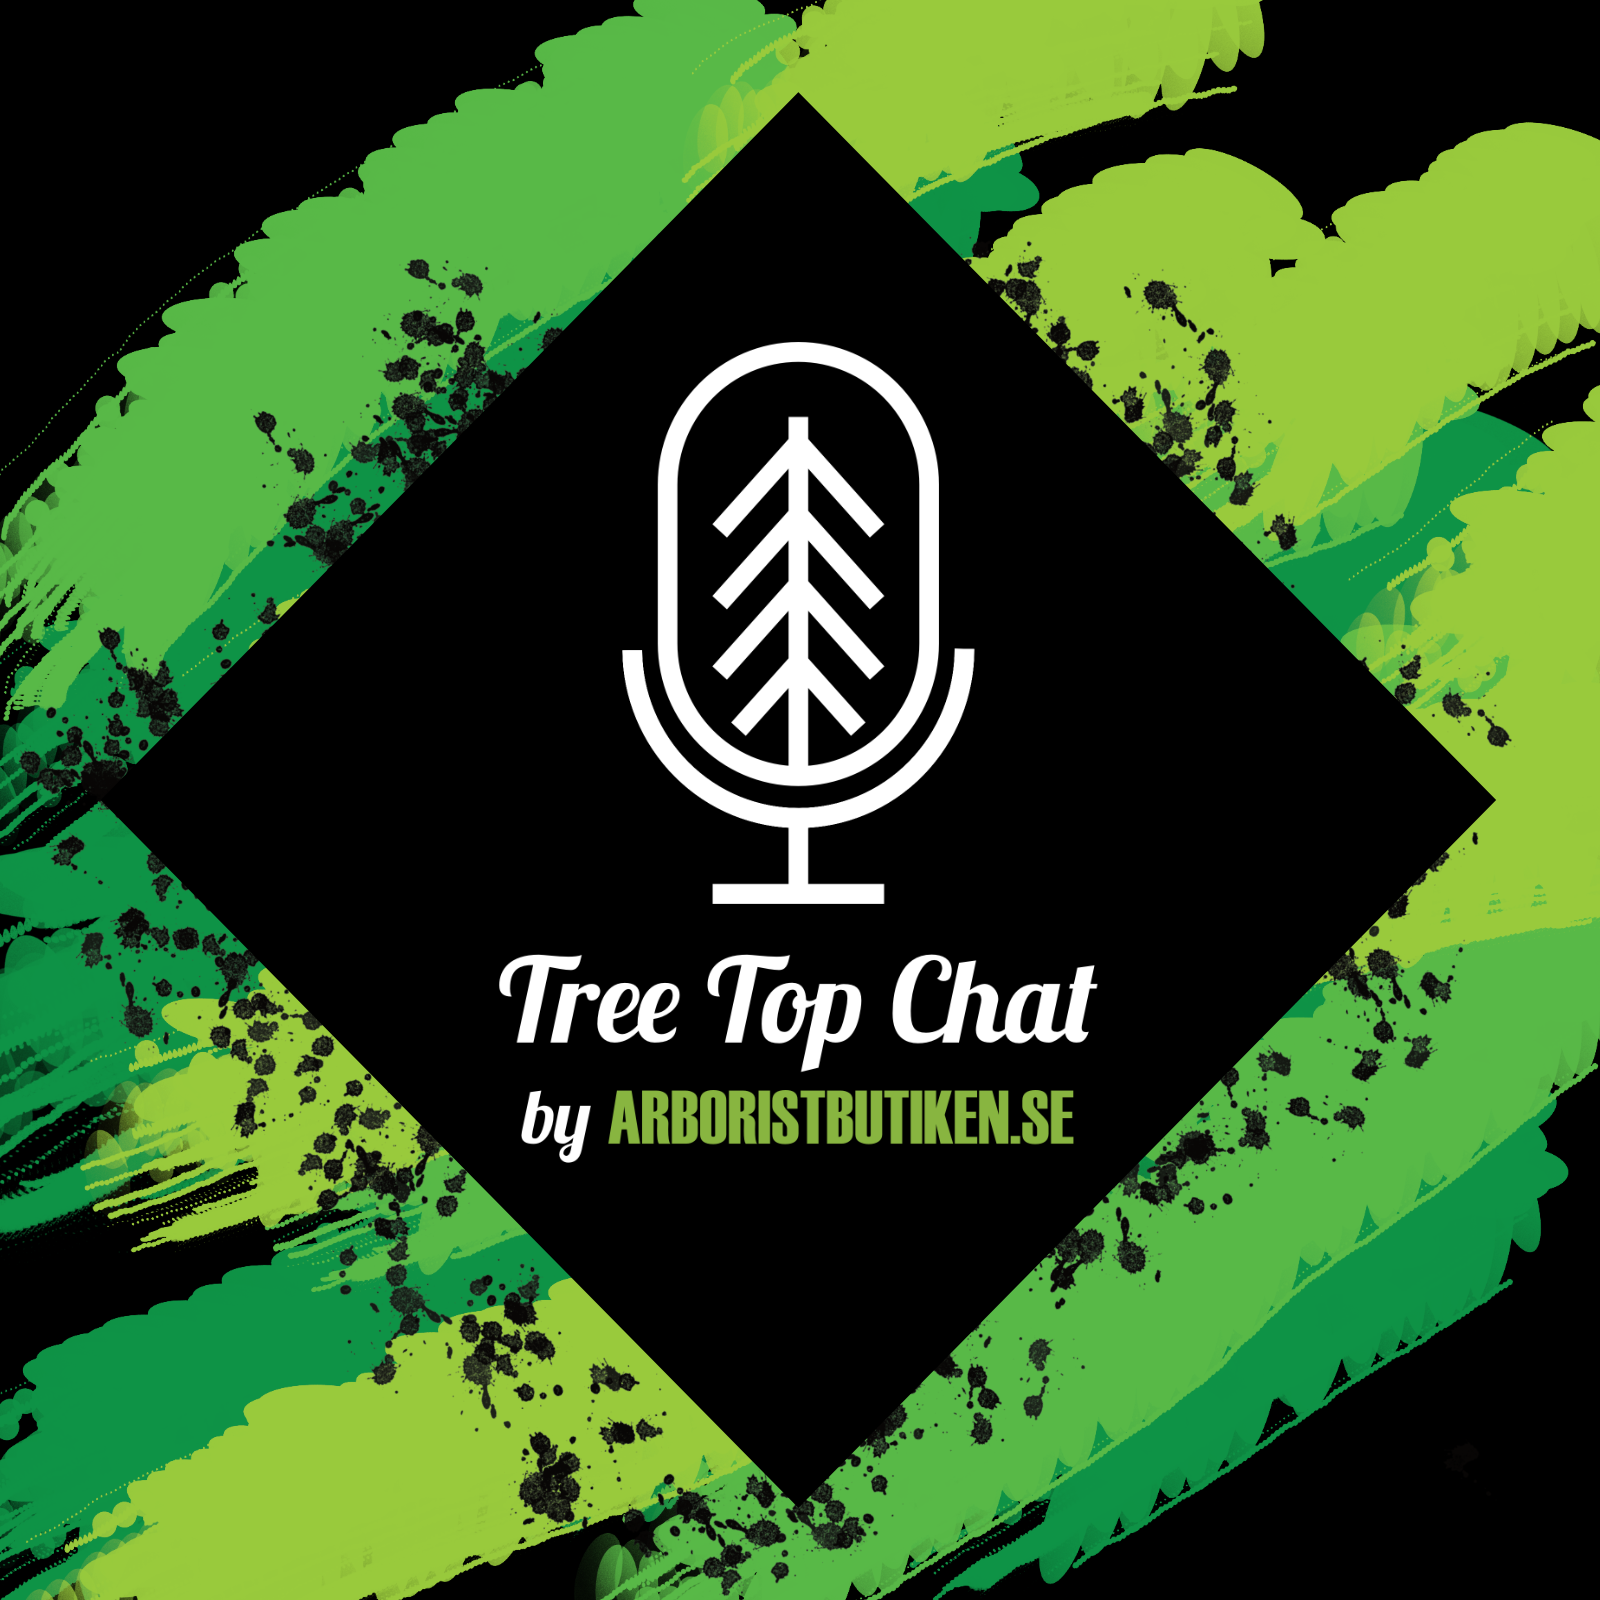 TreeTopChat by Arboristbutiken